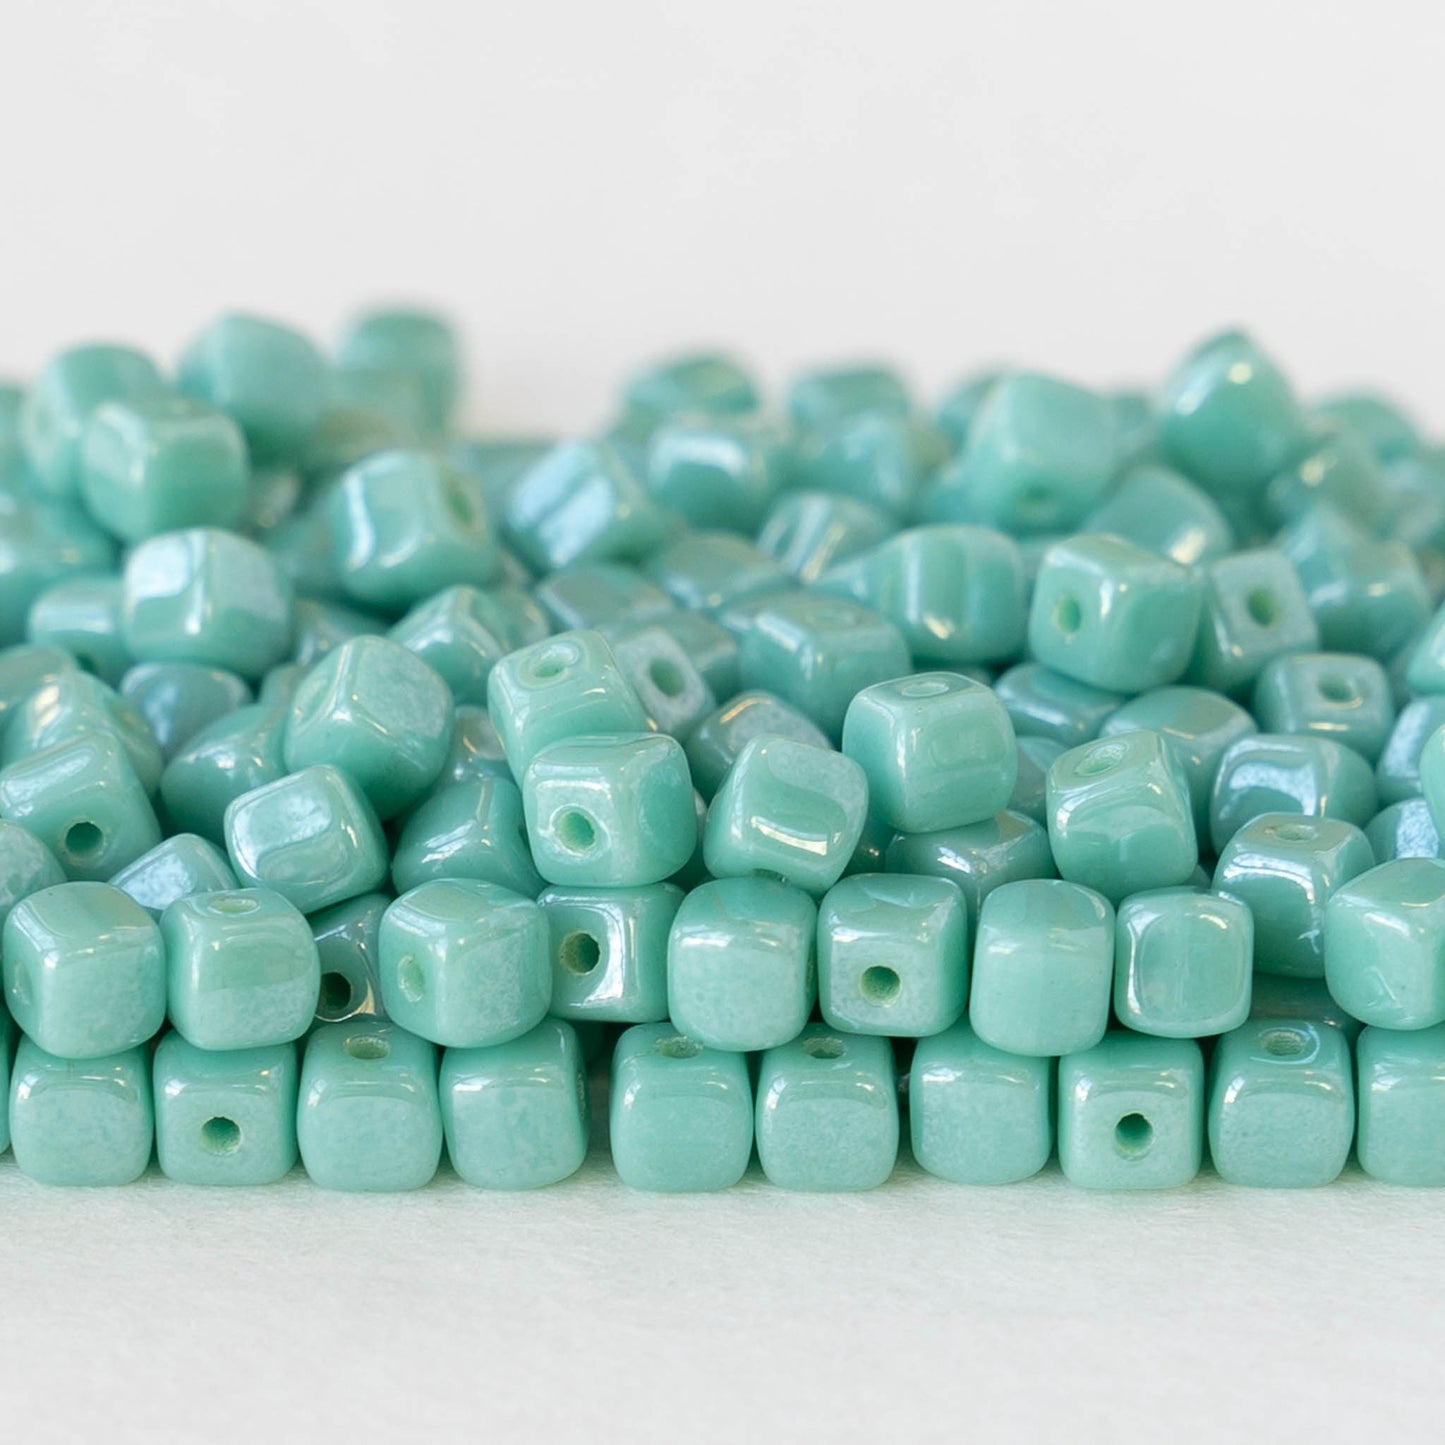 4mm Glass Cube Beads - Seafoam Green Luster - 100 beads